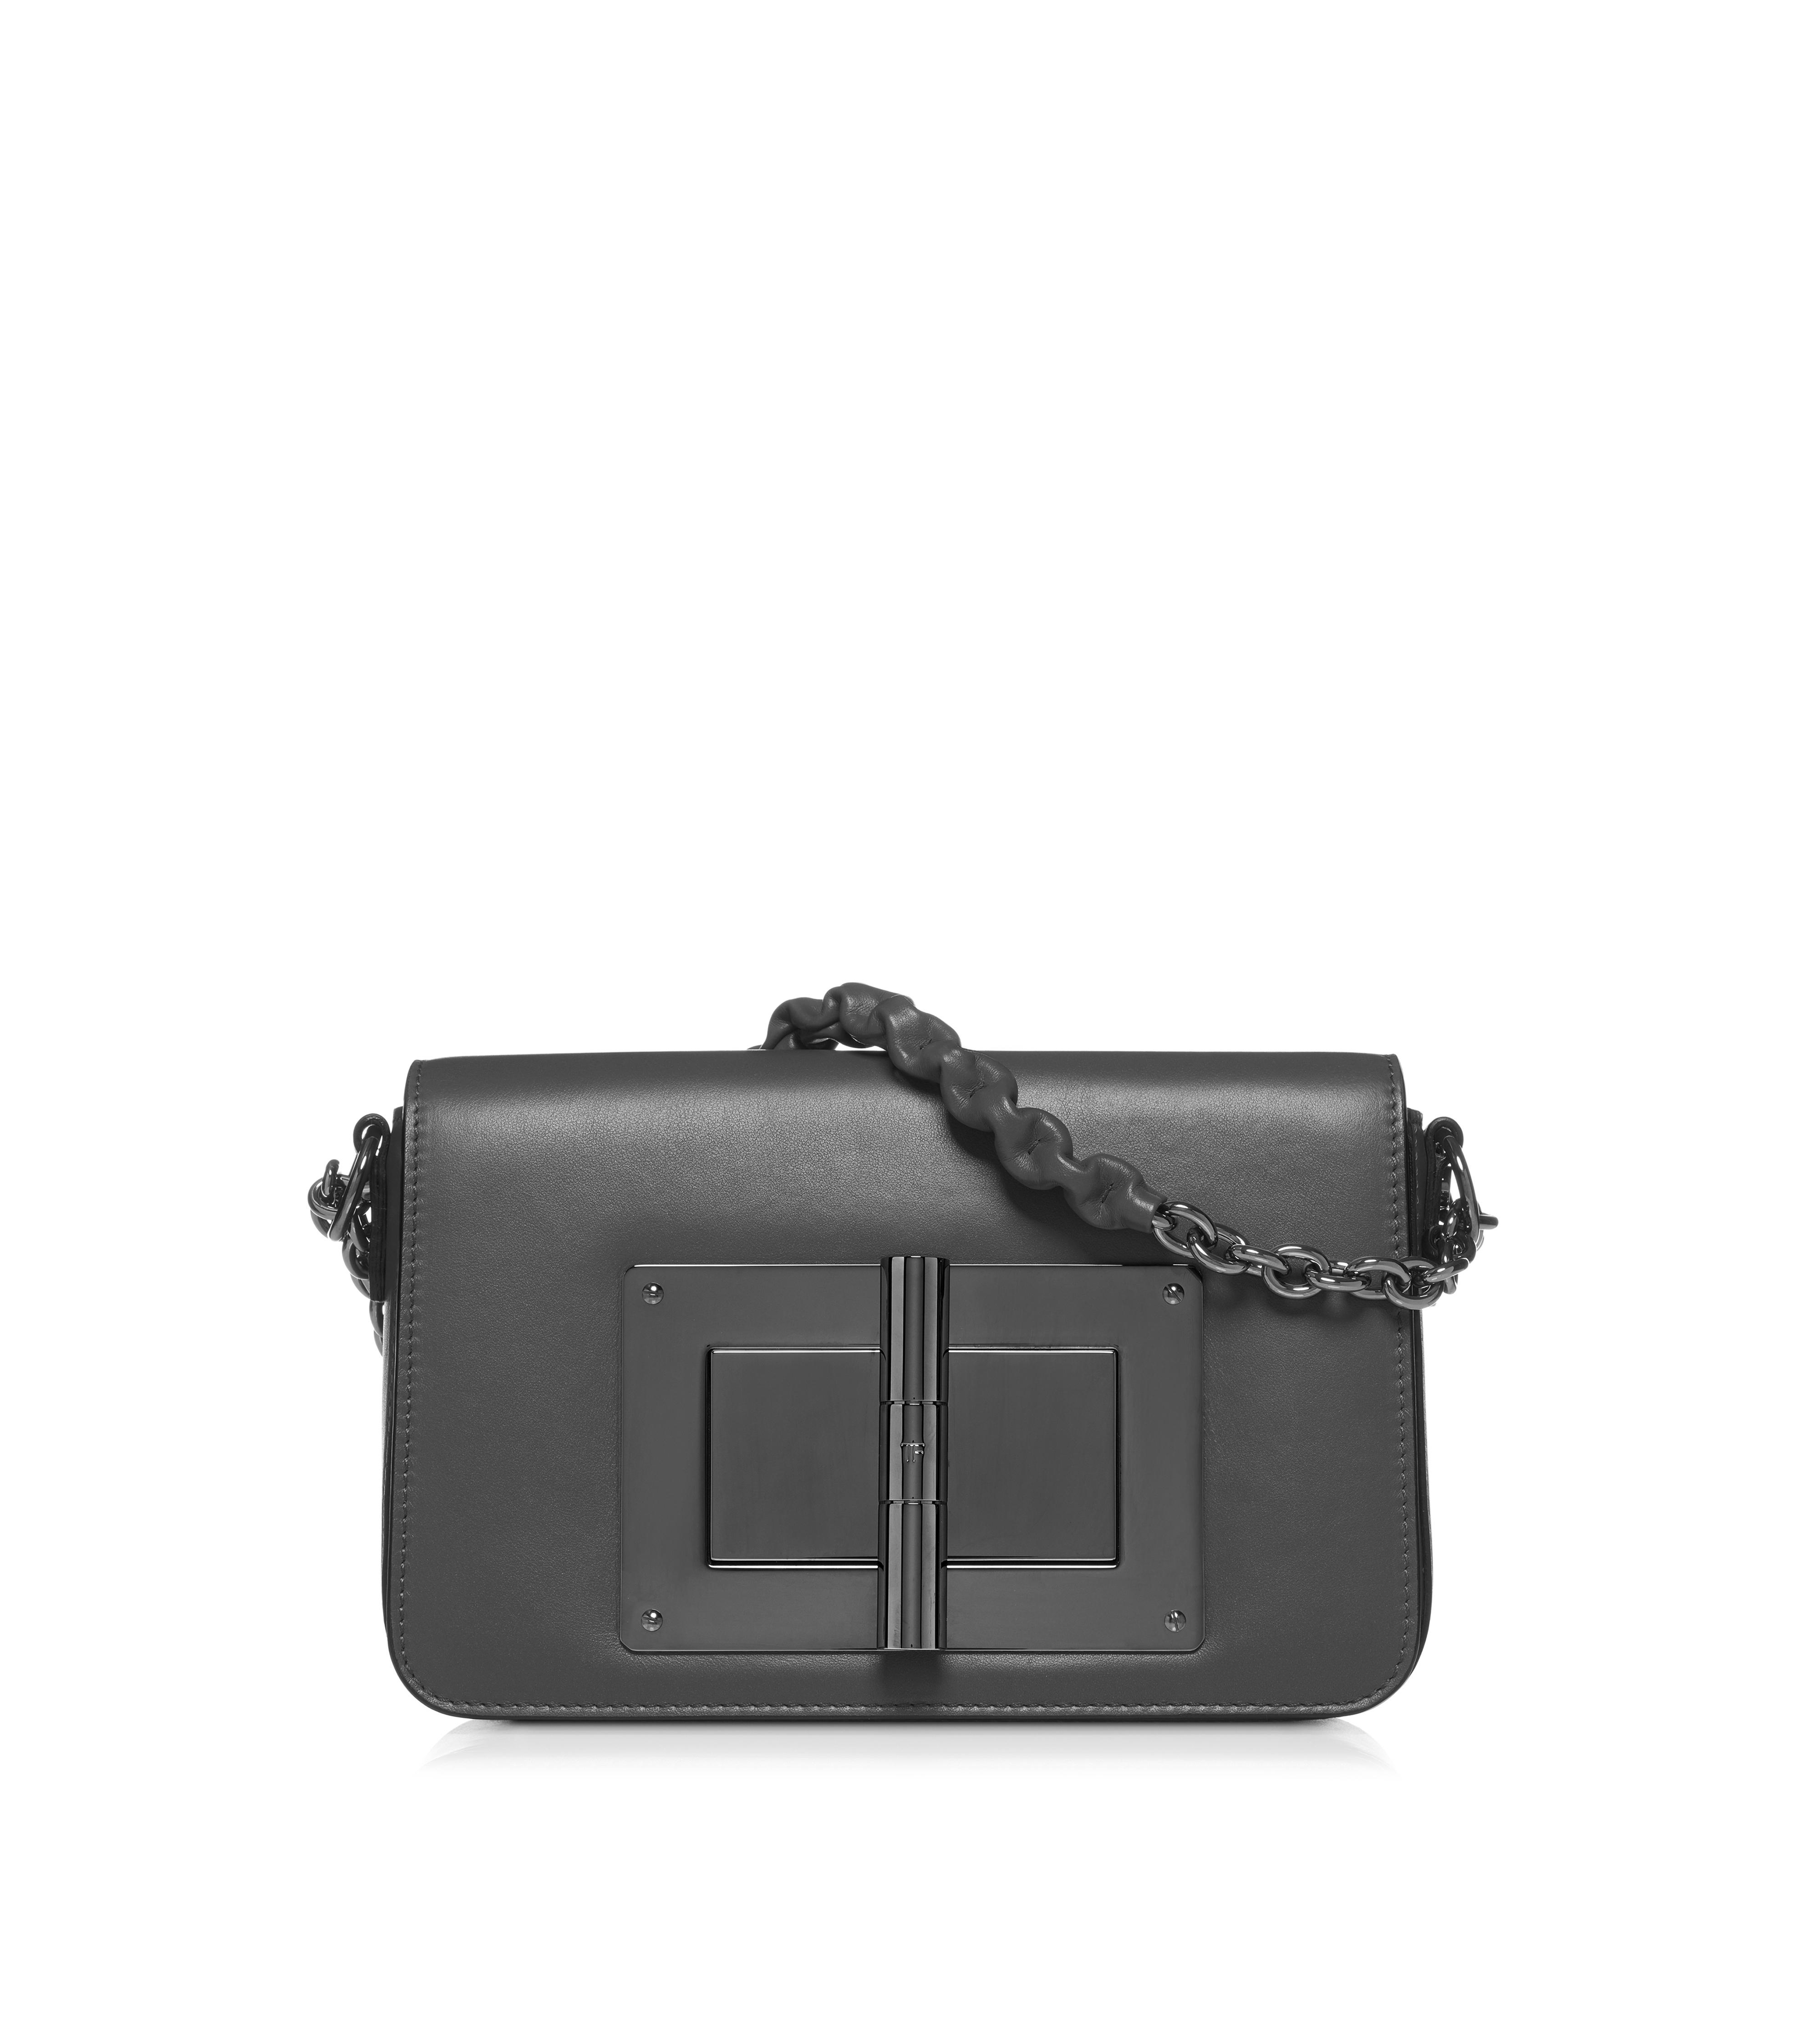 Handbags - Women | TomFord.com